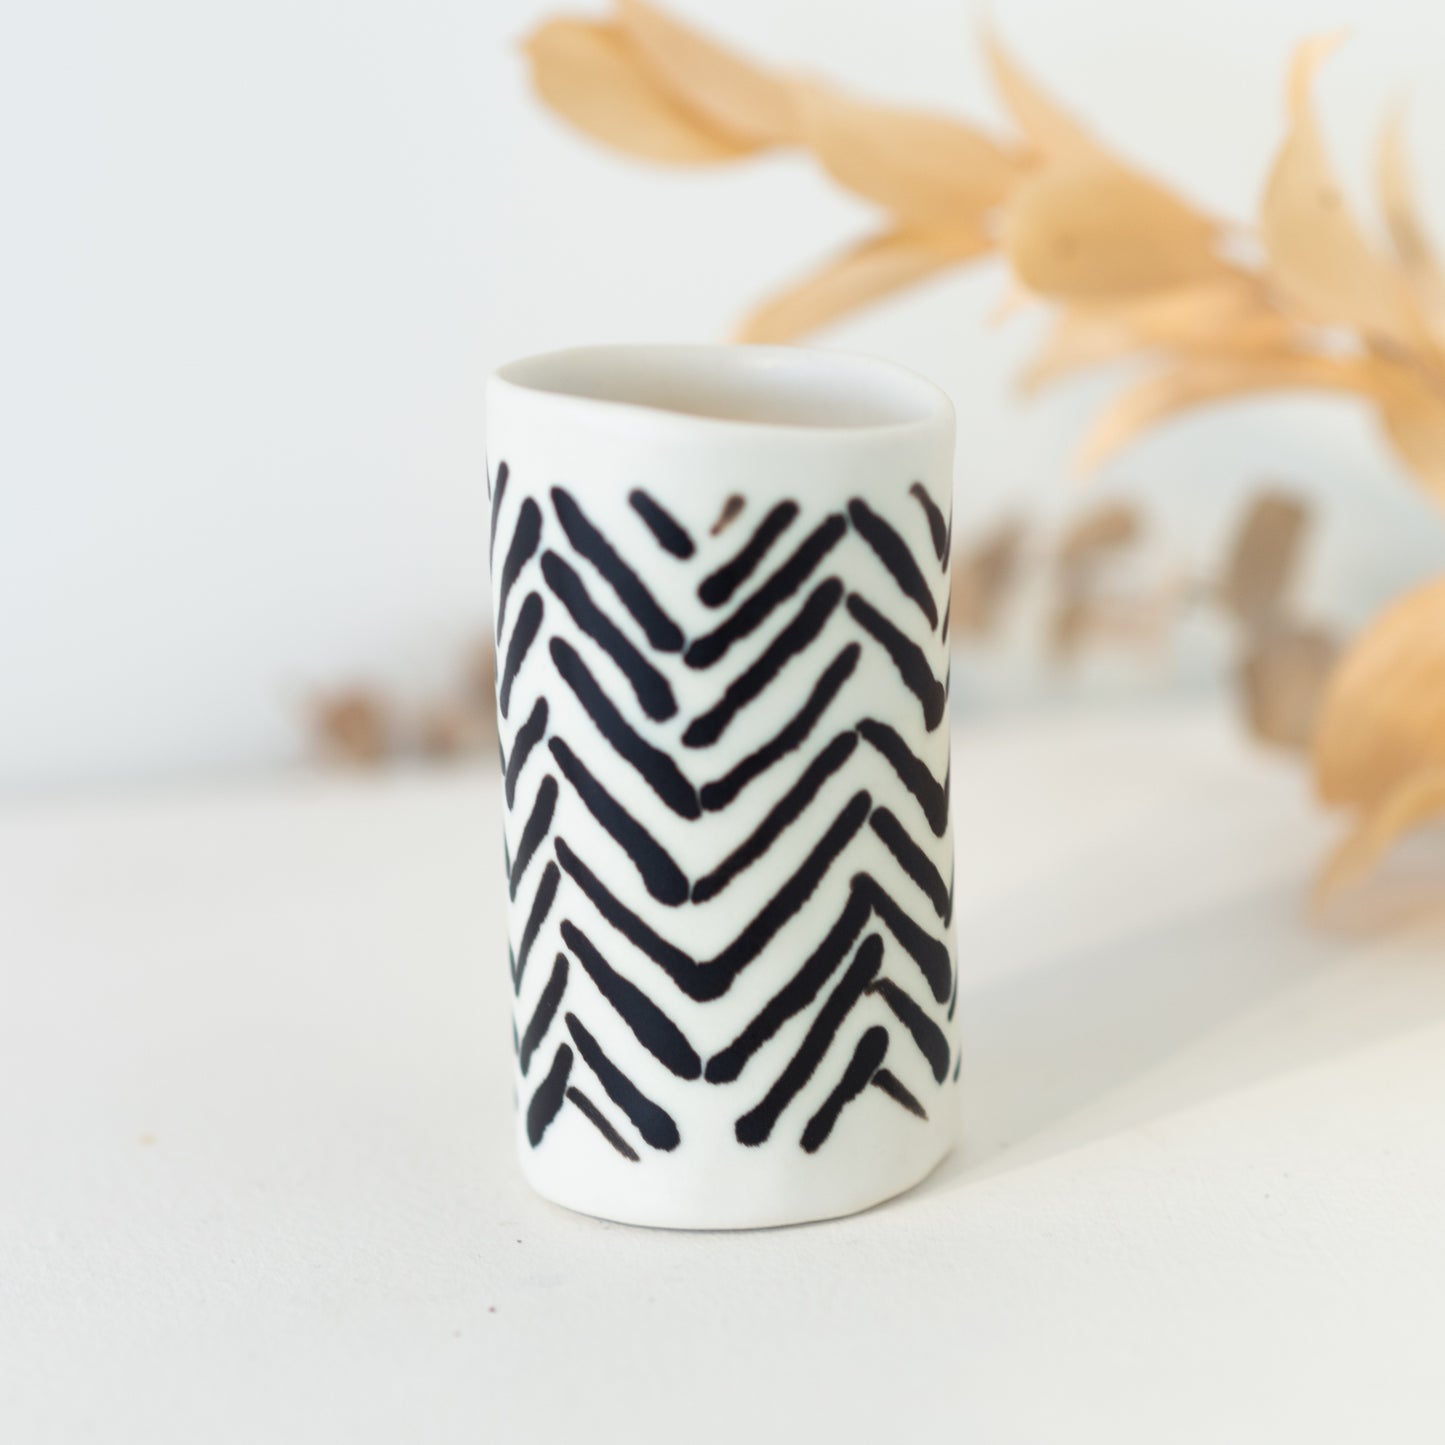 White vase with black chevron patterning.